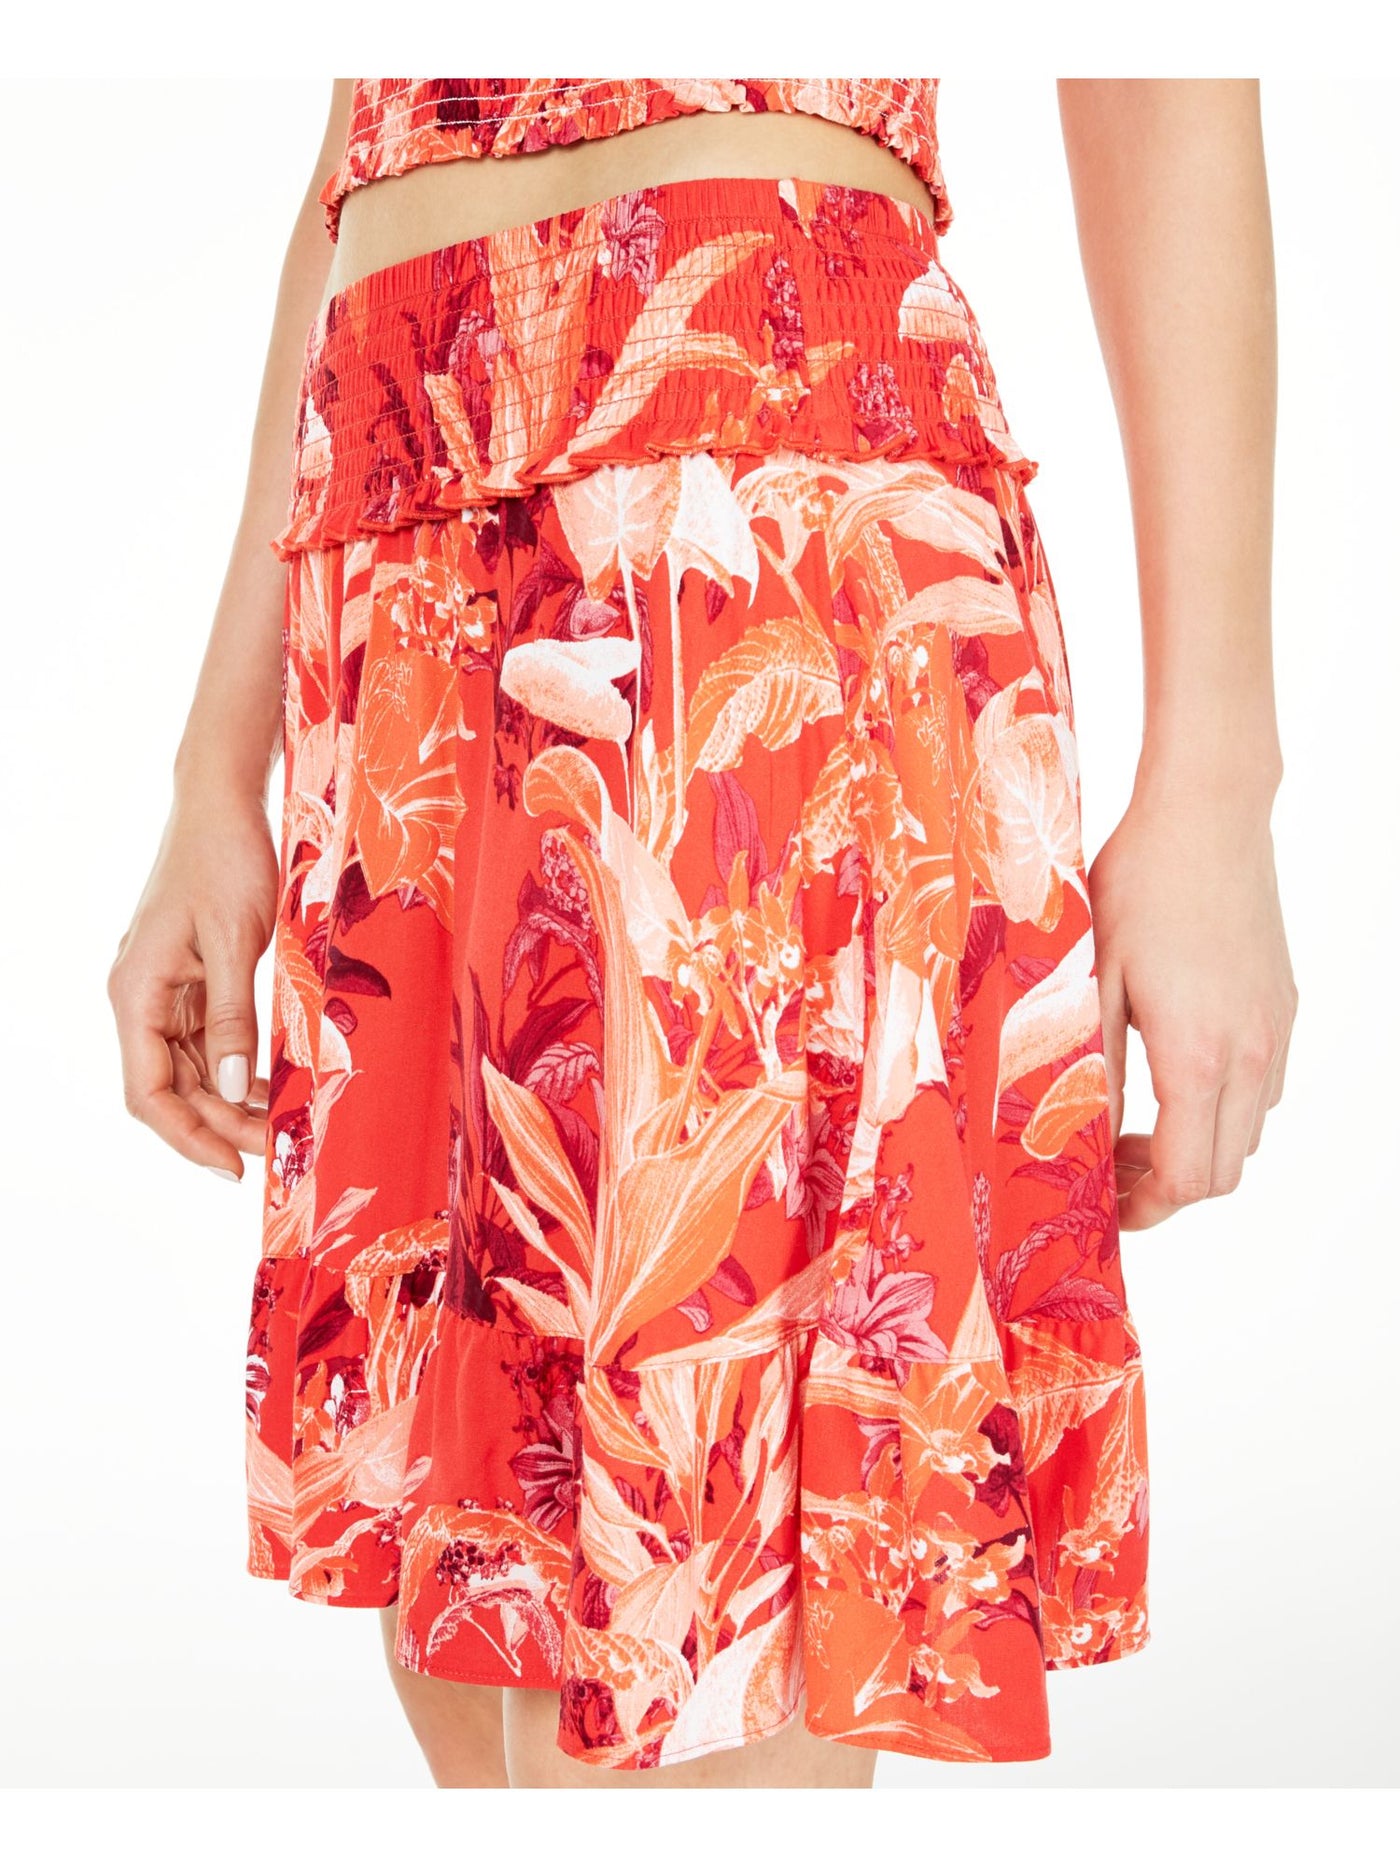 GUESS Womens Red Floral Short Ruffled Skirt XL